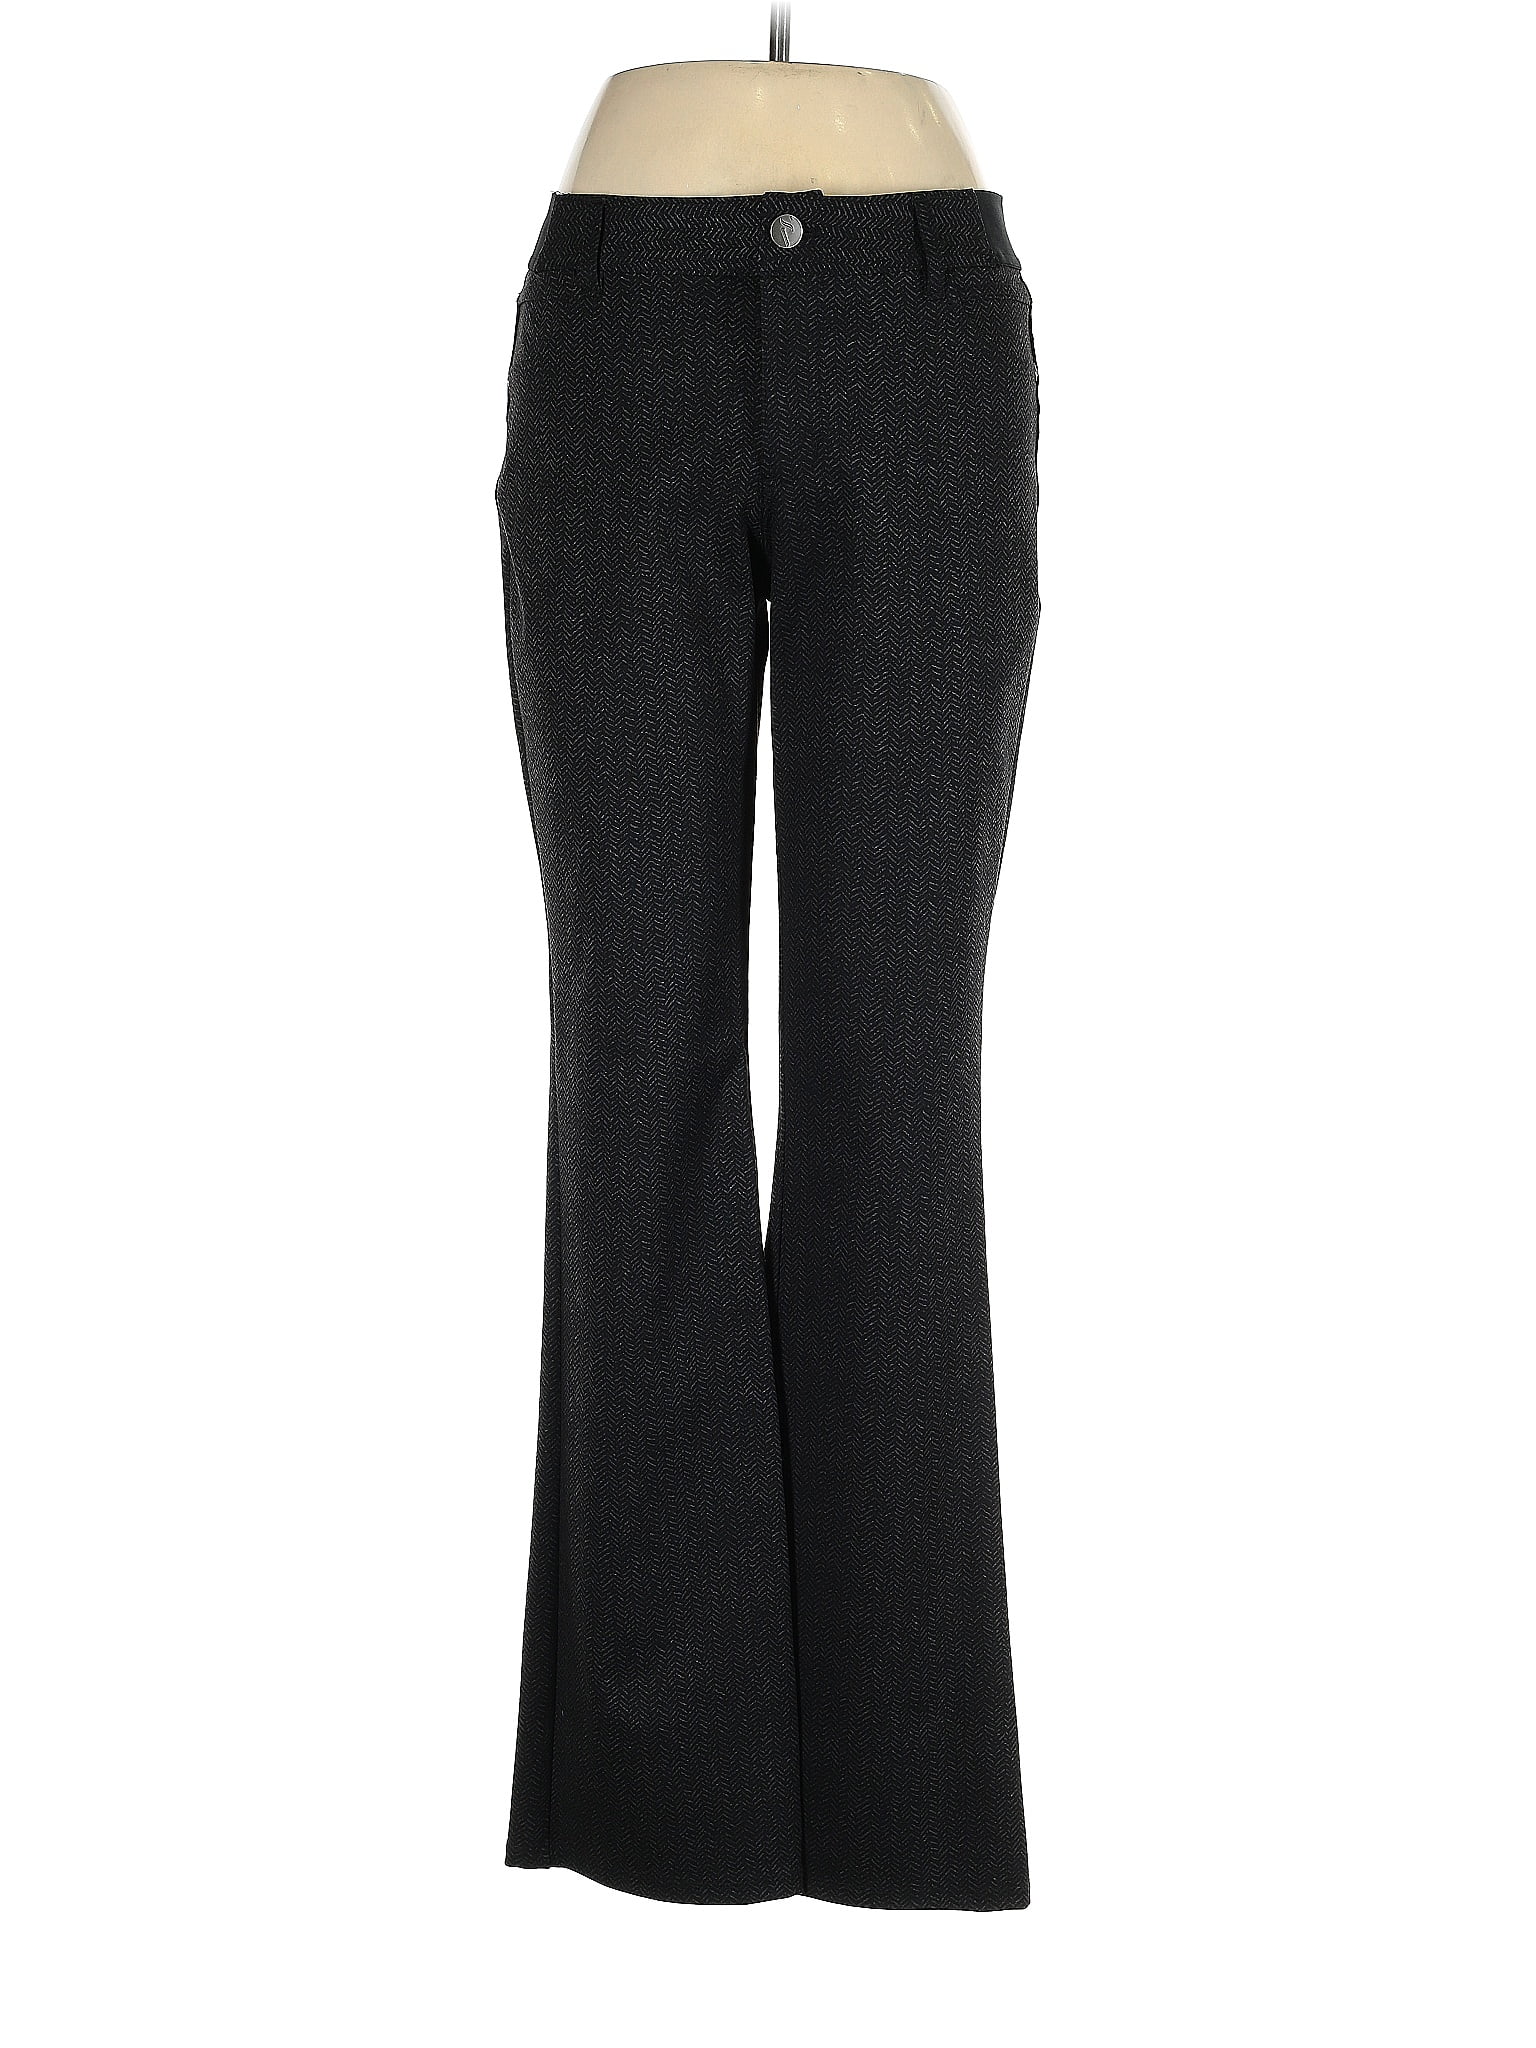 Simply Vera Vera Wang Women's Brown Luxe Cotton Leggings (VW5226)- Sizes 1X  & 2X